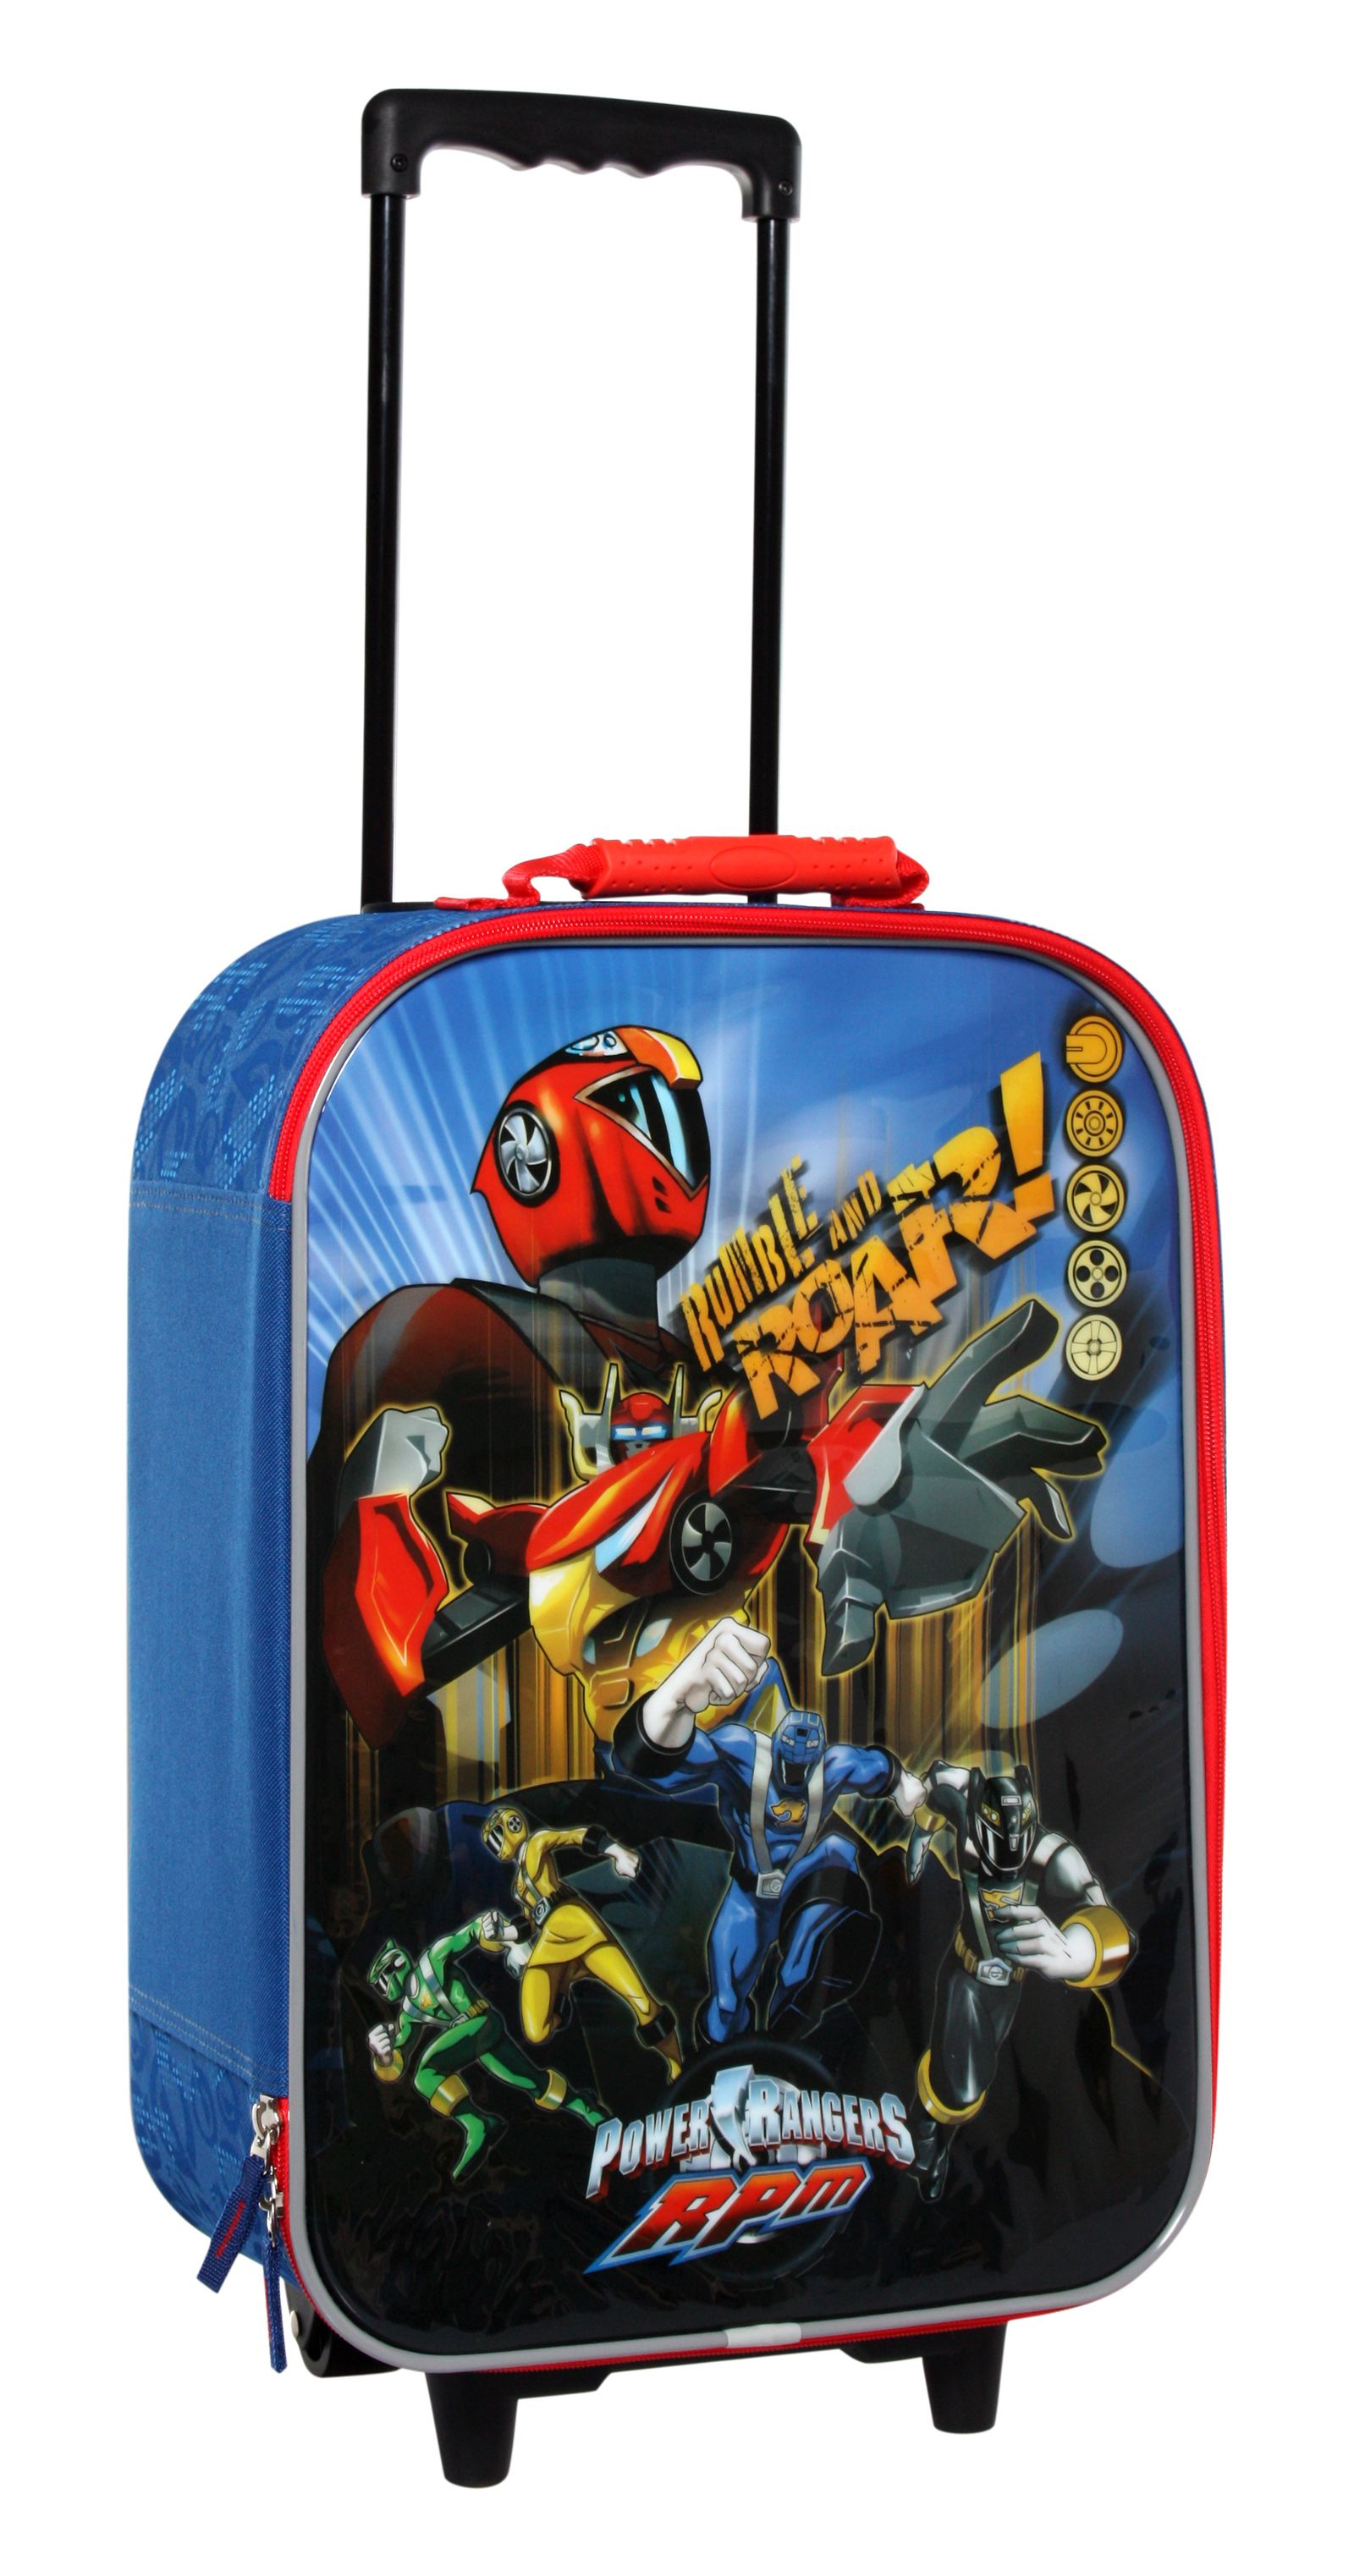 Travel Luggage Bag - Powers Rangers RPM